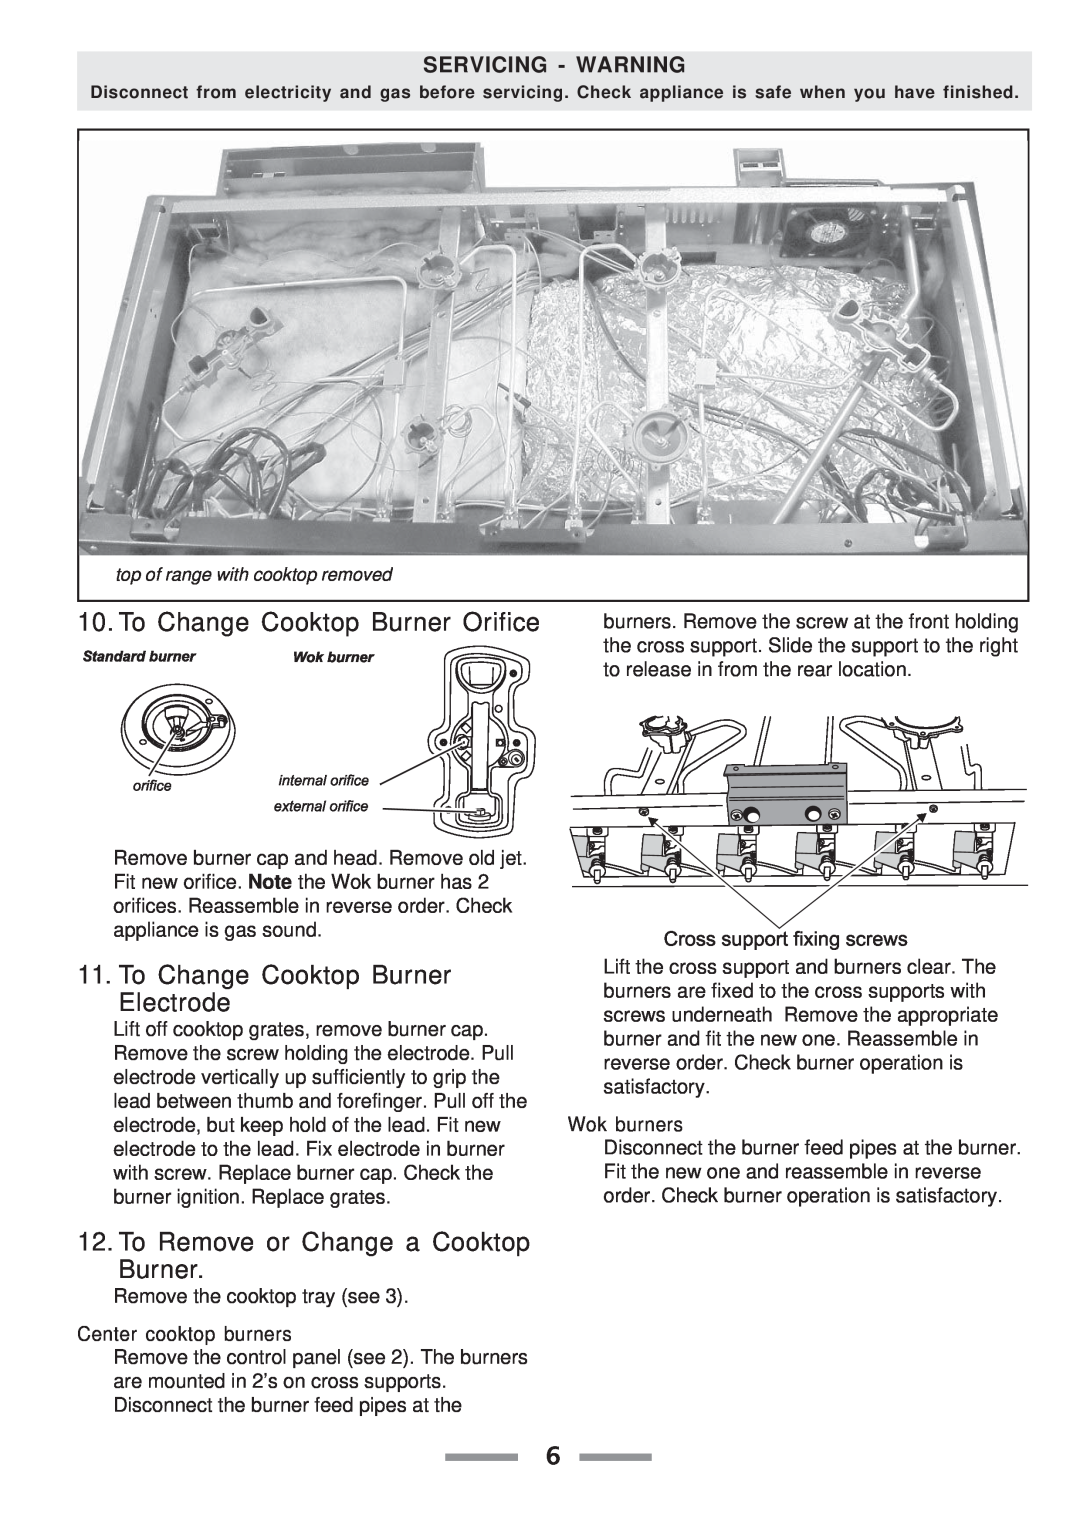 Aga Ranges F104010-01 manual To Change Cooktop Burner Orifice, To Change Cooktop Burner Electrode 